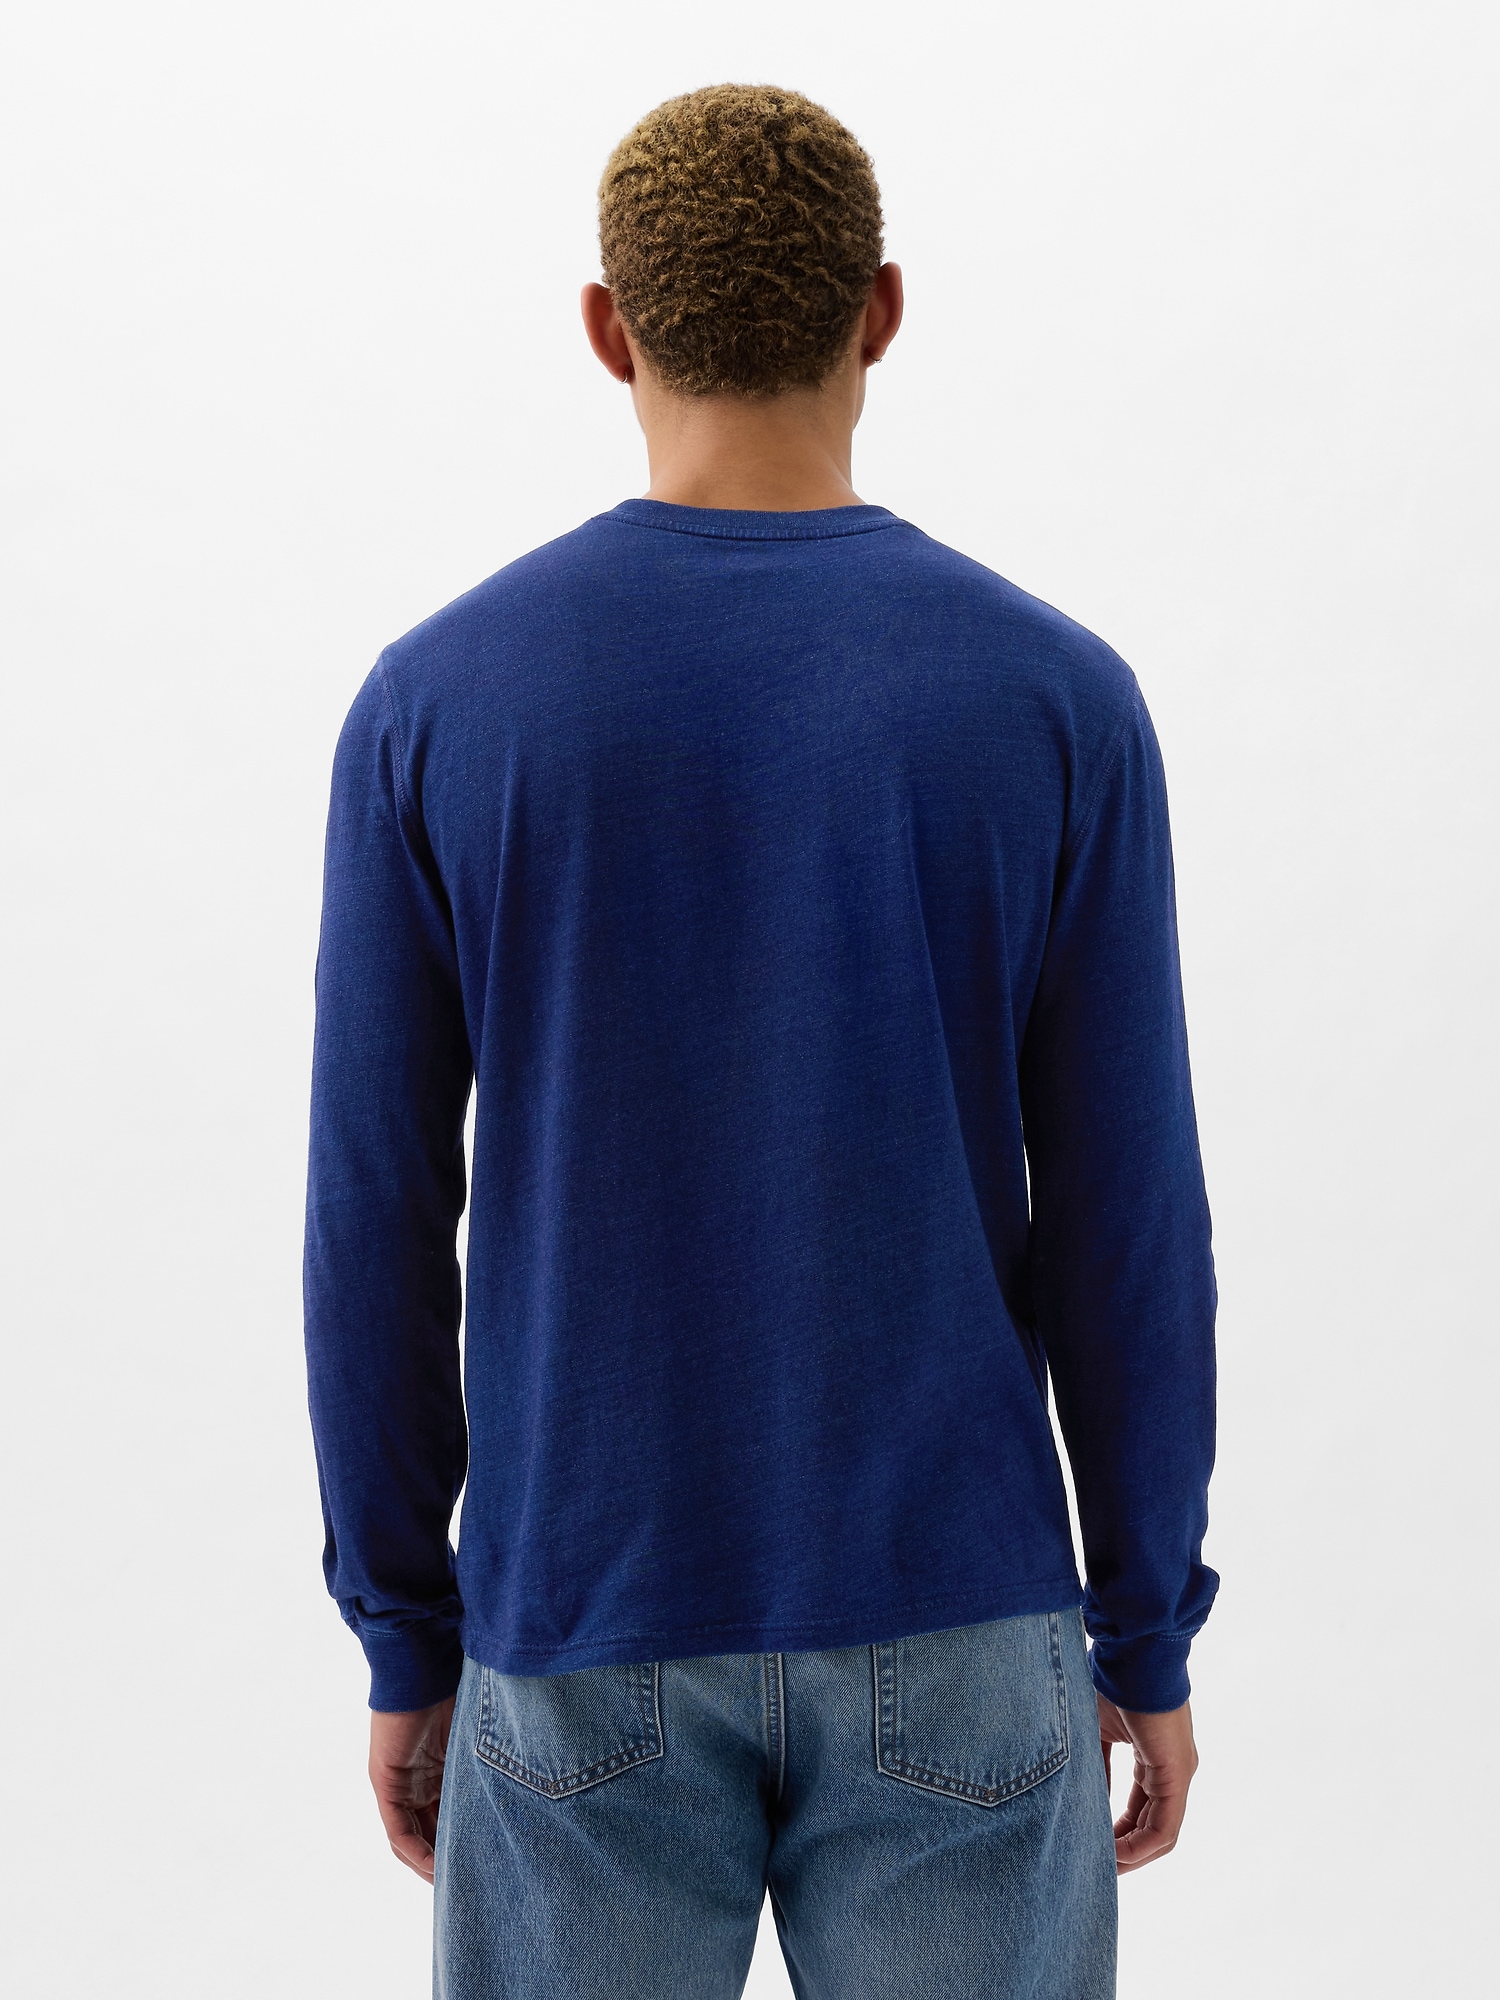 GAP Men's Soft Cotton Raglan Short Sleeve Henley Shirt (Medieval Blue, XL)  